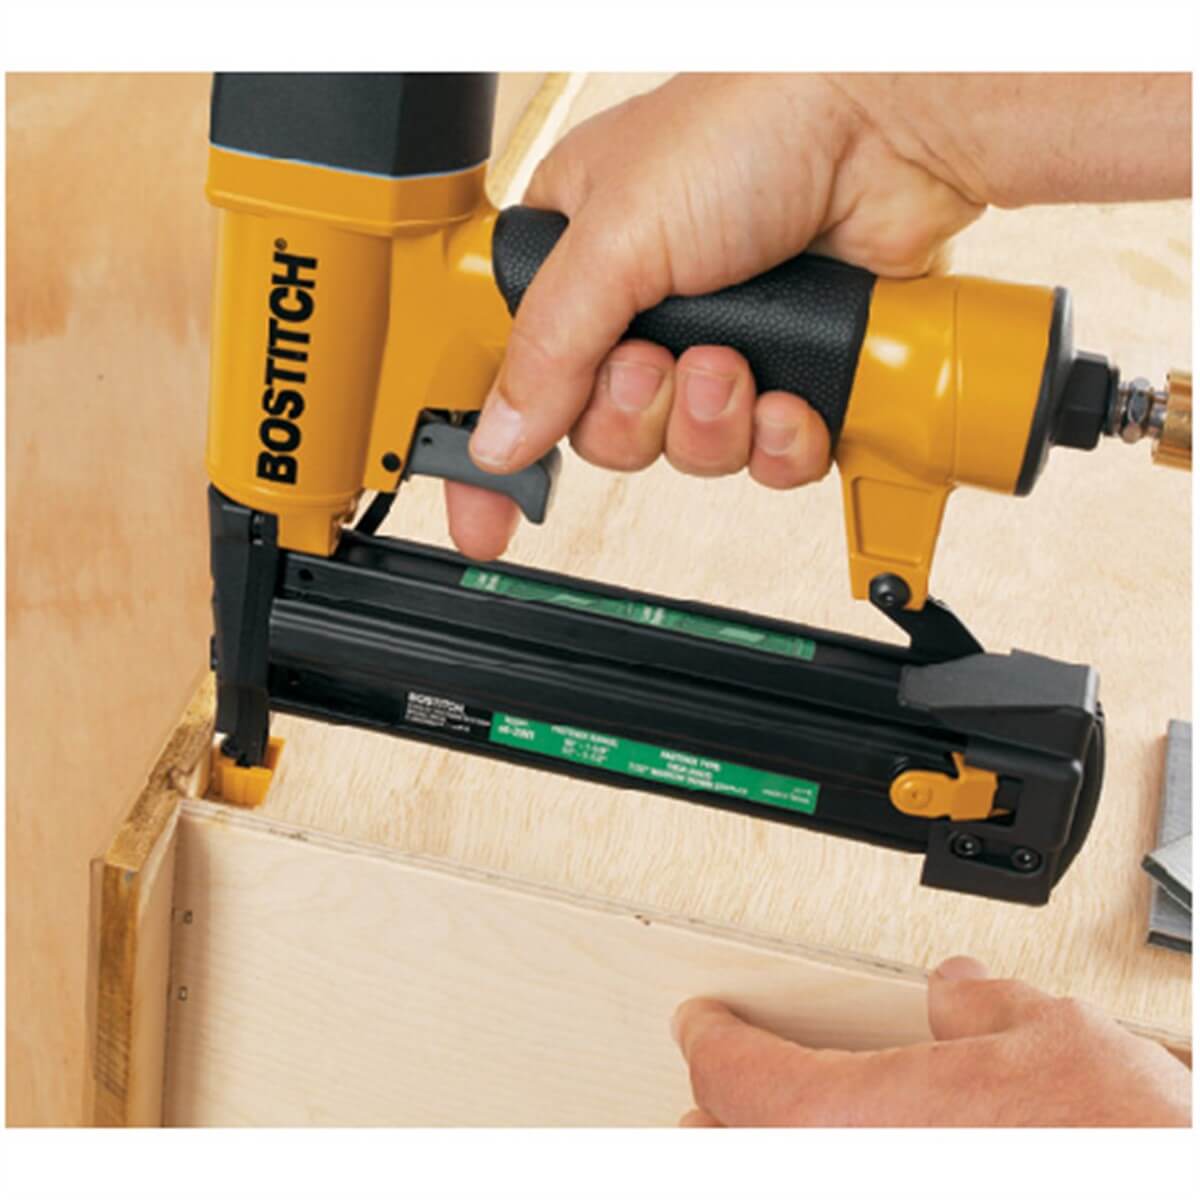 Bostitch SB2IN1 - 18GA Brad Nailer & Finish Stapler Kit - wise-line-tools